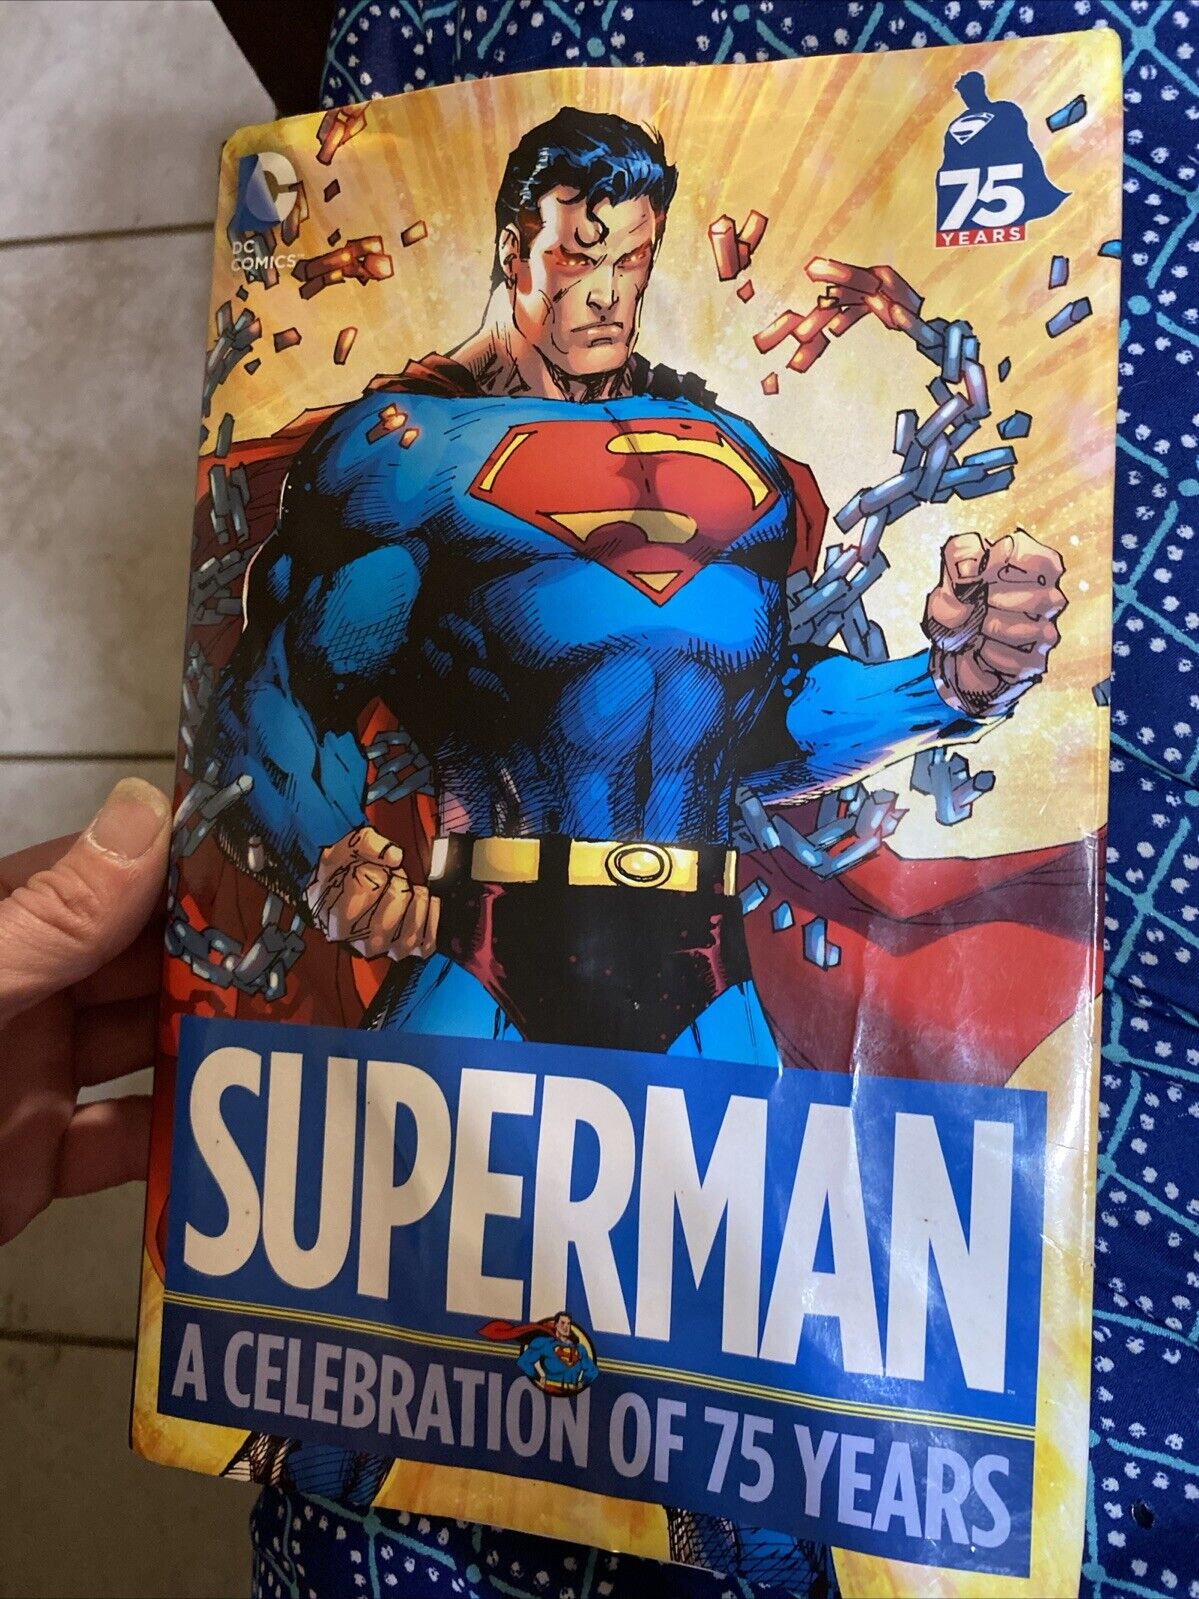 Superman: a Celebration of 75 Years (DC Comics 2013 January 2014)